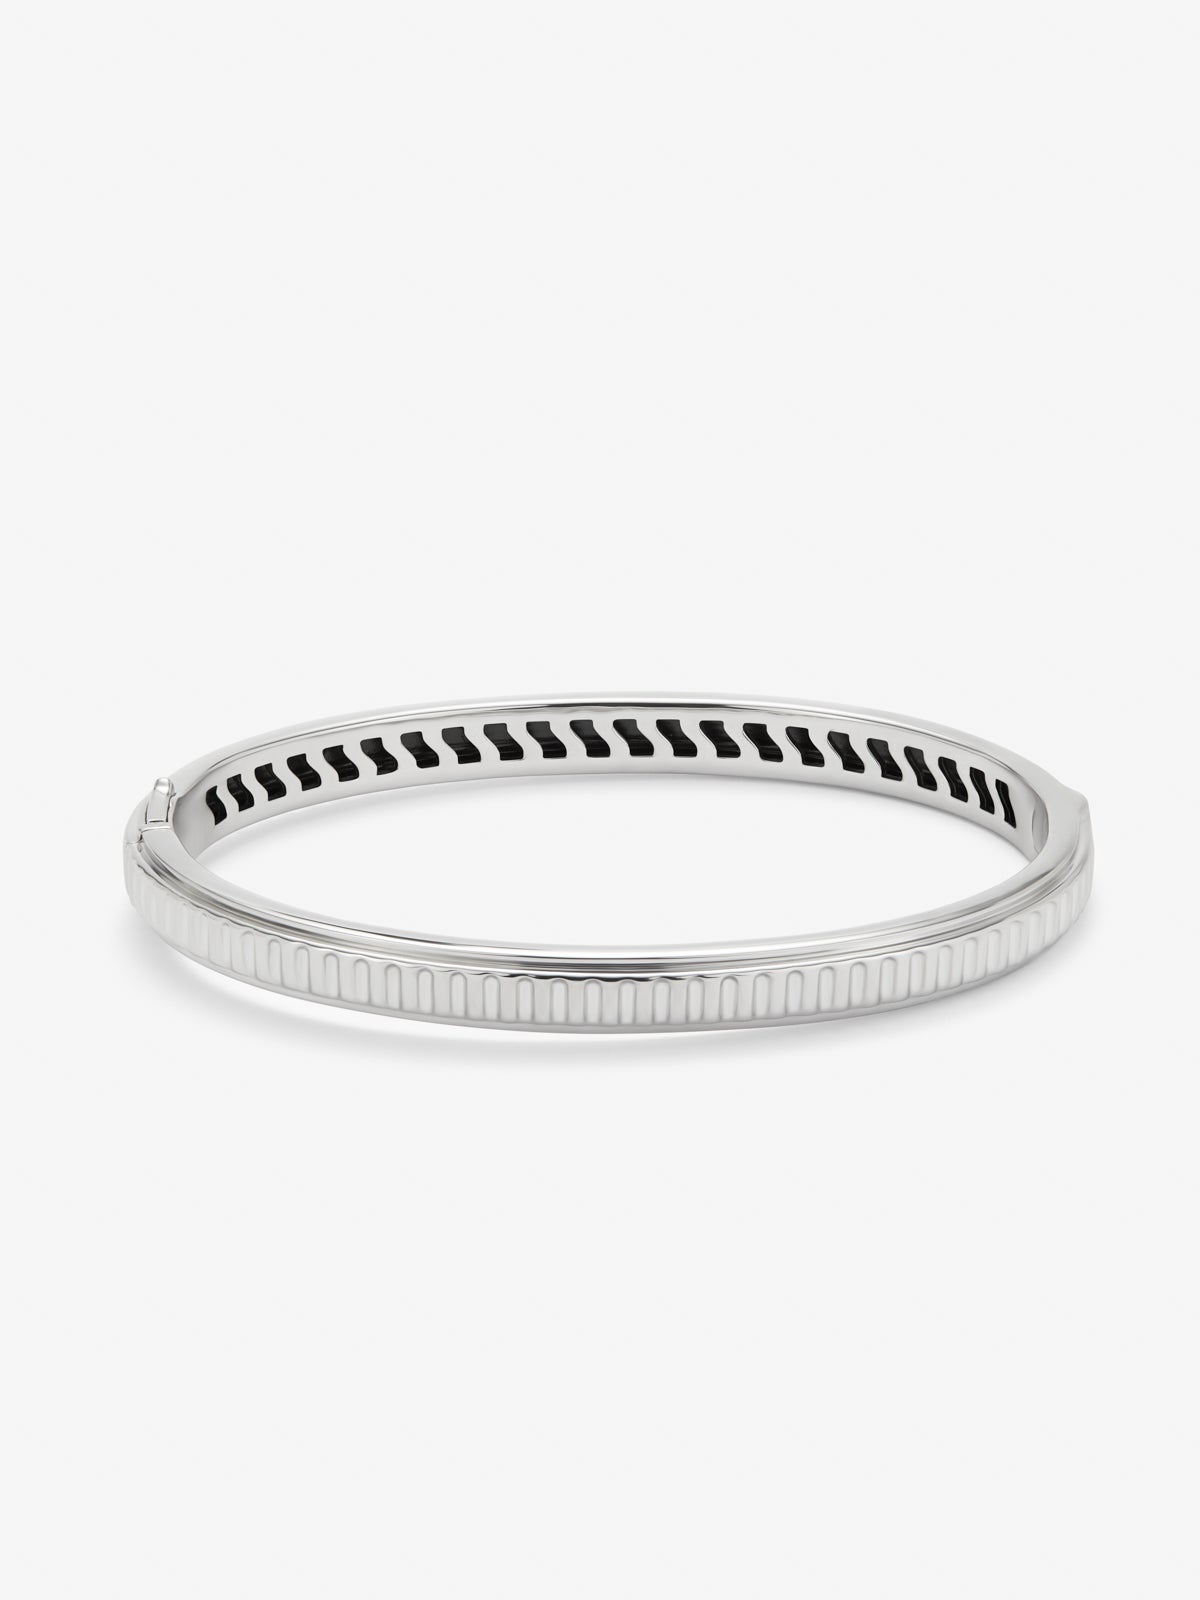 Rigid 925 silver bracelet